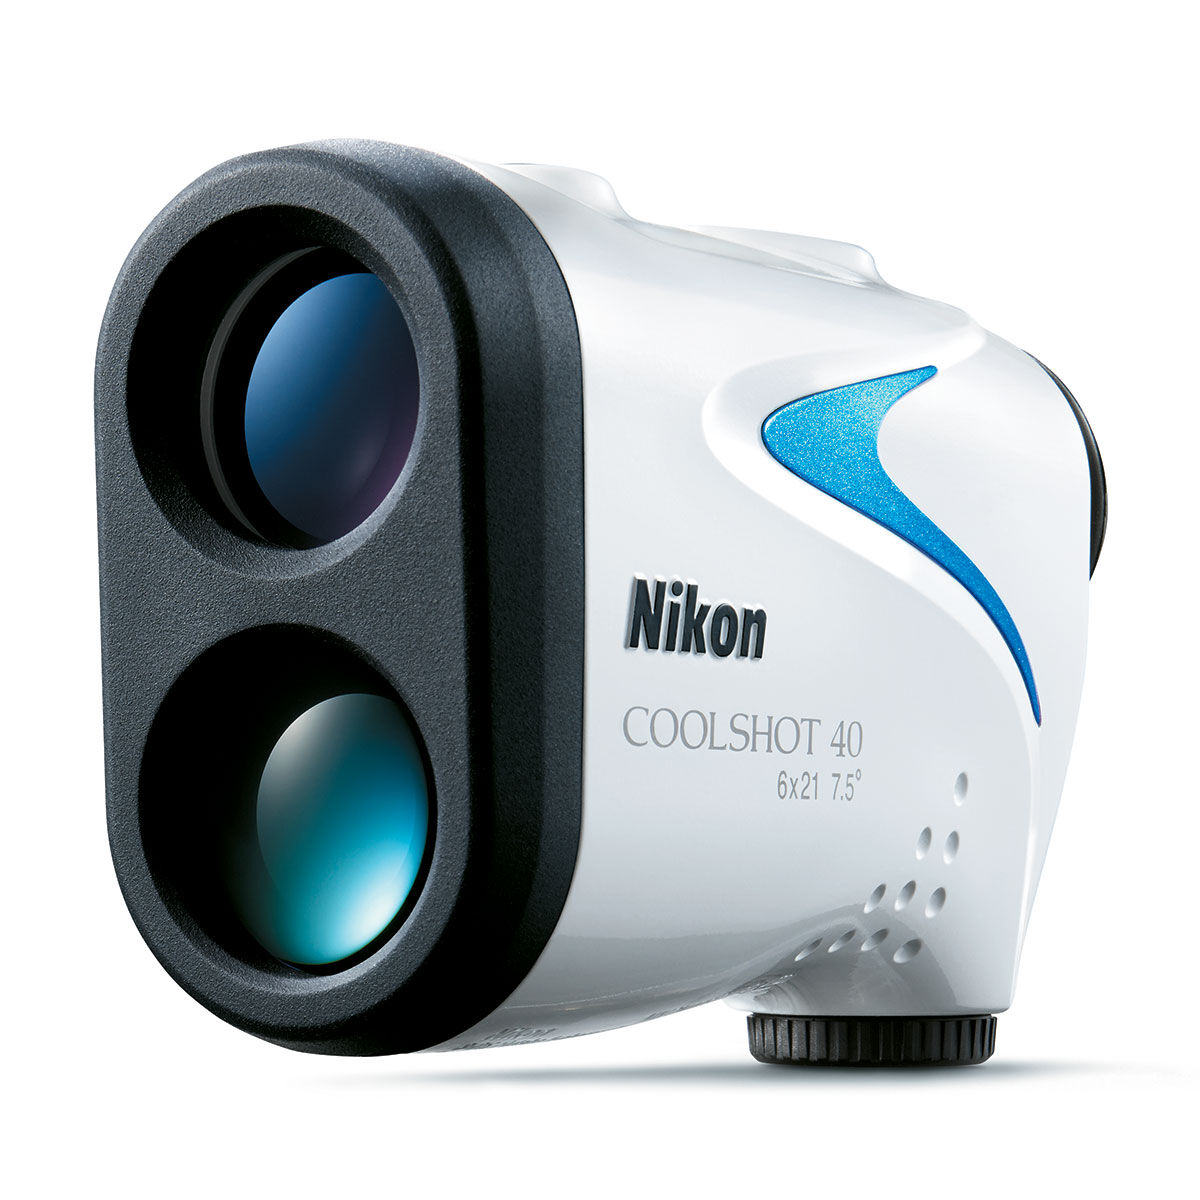 Nikon Coolshot 40 Golf Rangefinder from american golf